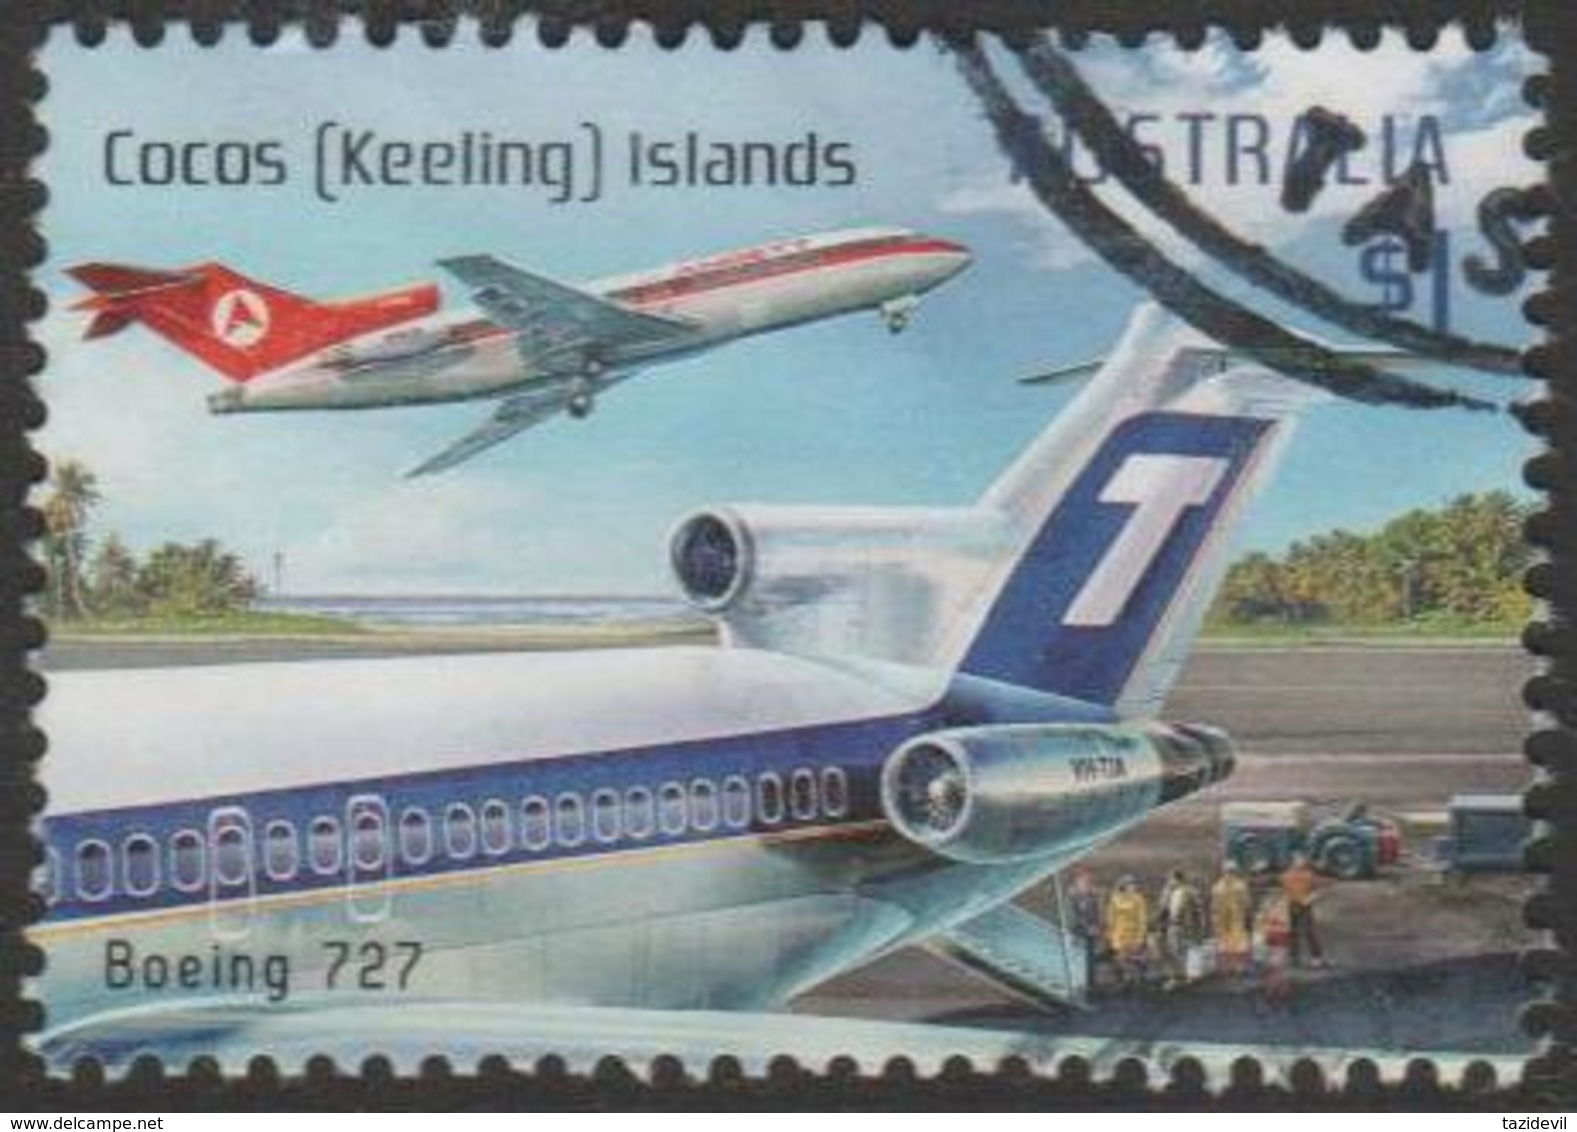 COCOS (KEELING) ISLANDS - USED 2017 $1.00 Aviation - Boeing 727 - Aircraft - Islas Cocos (Keeling)